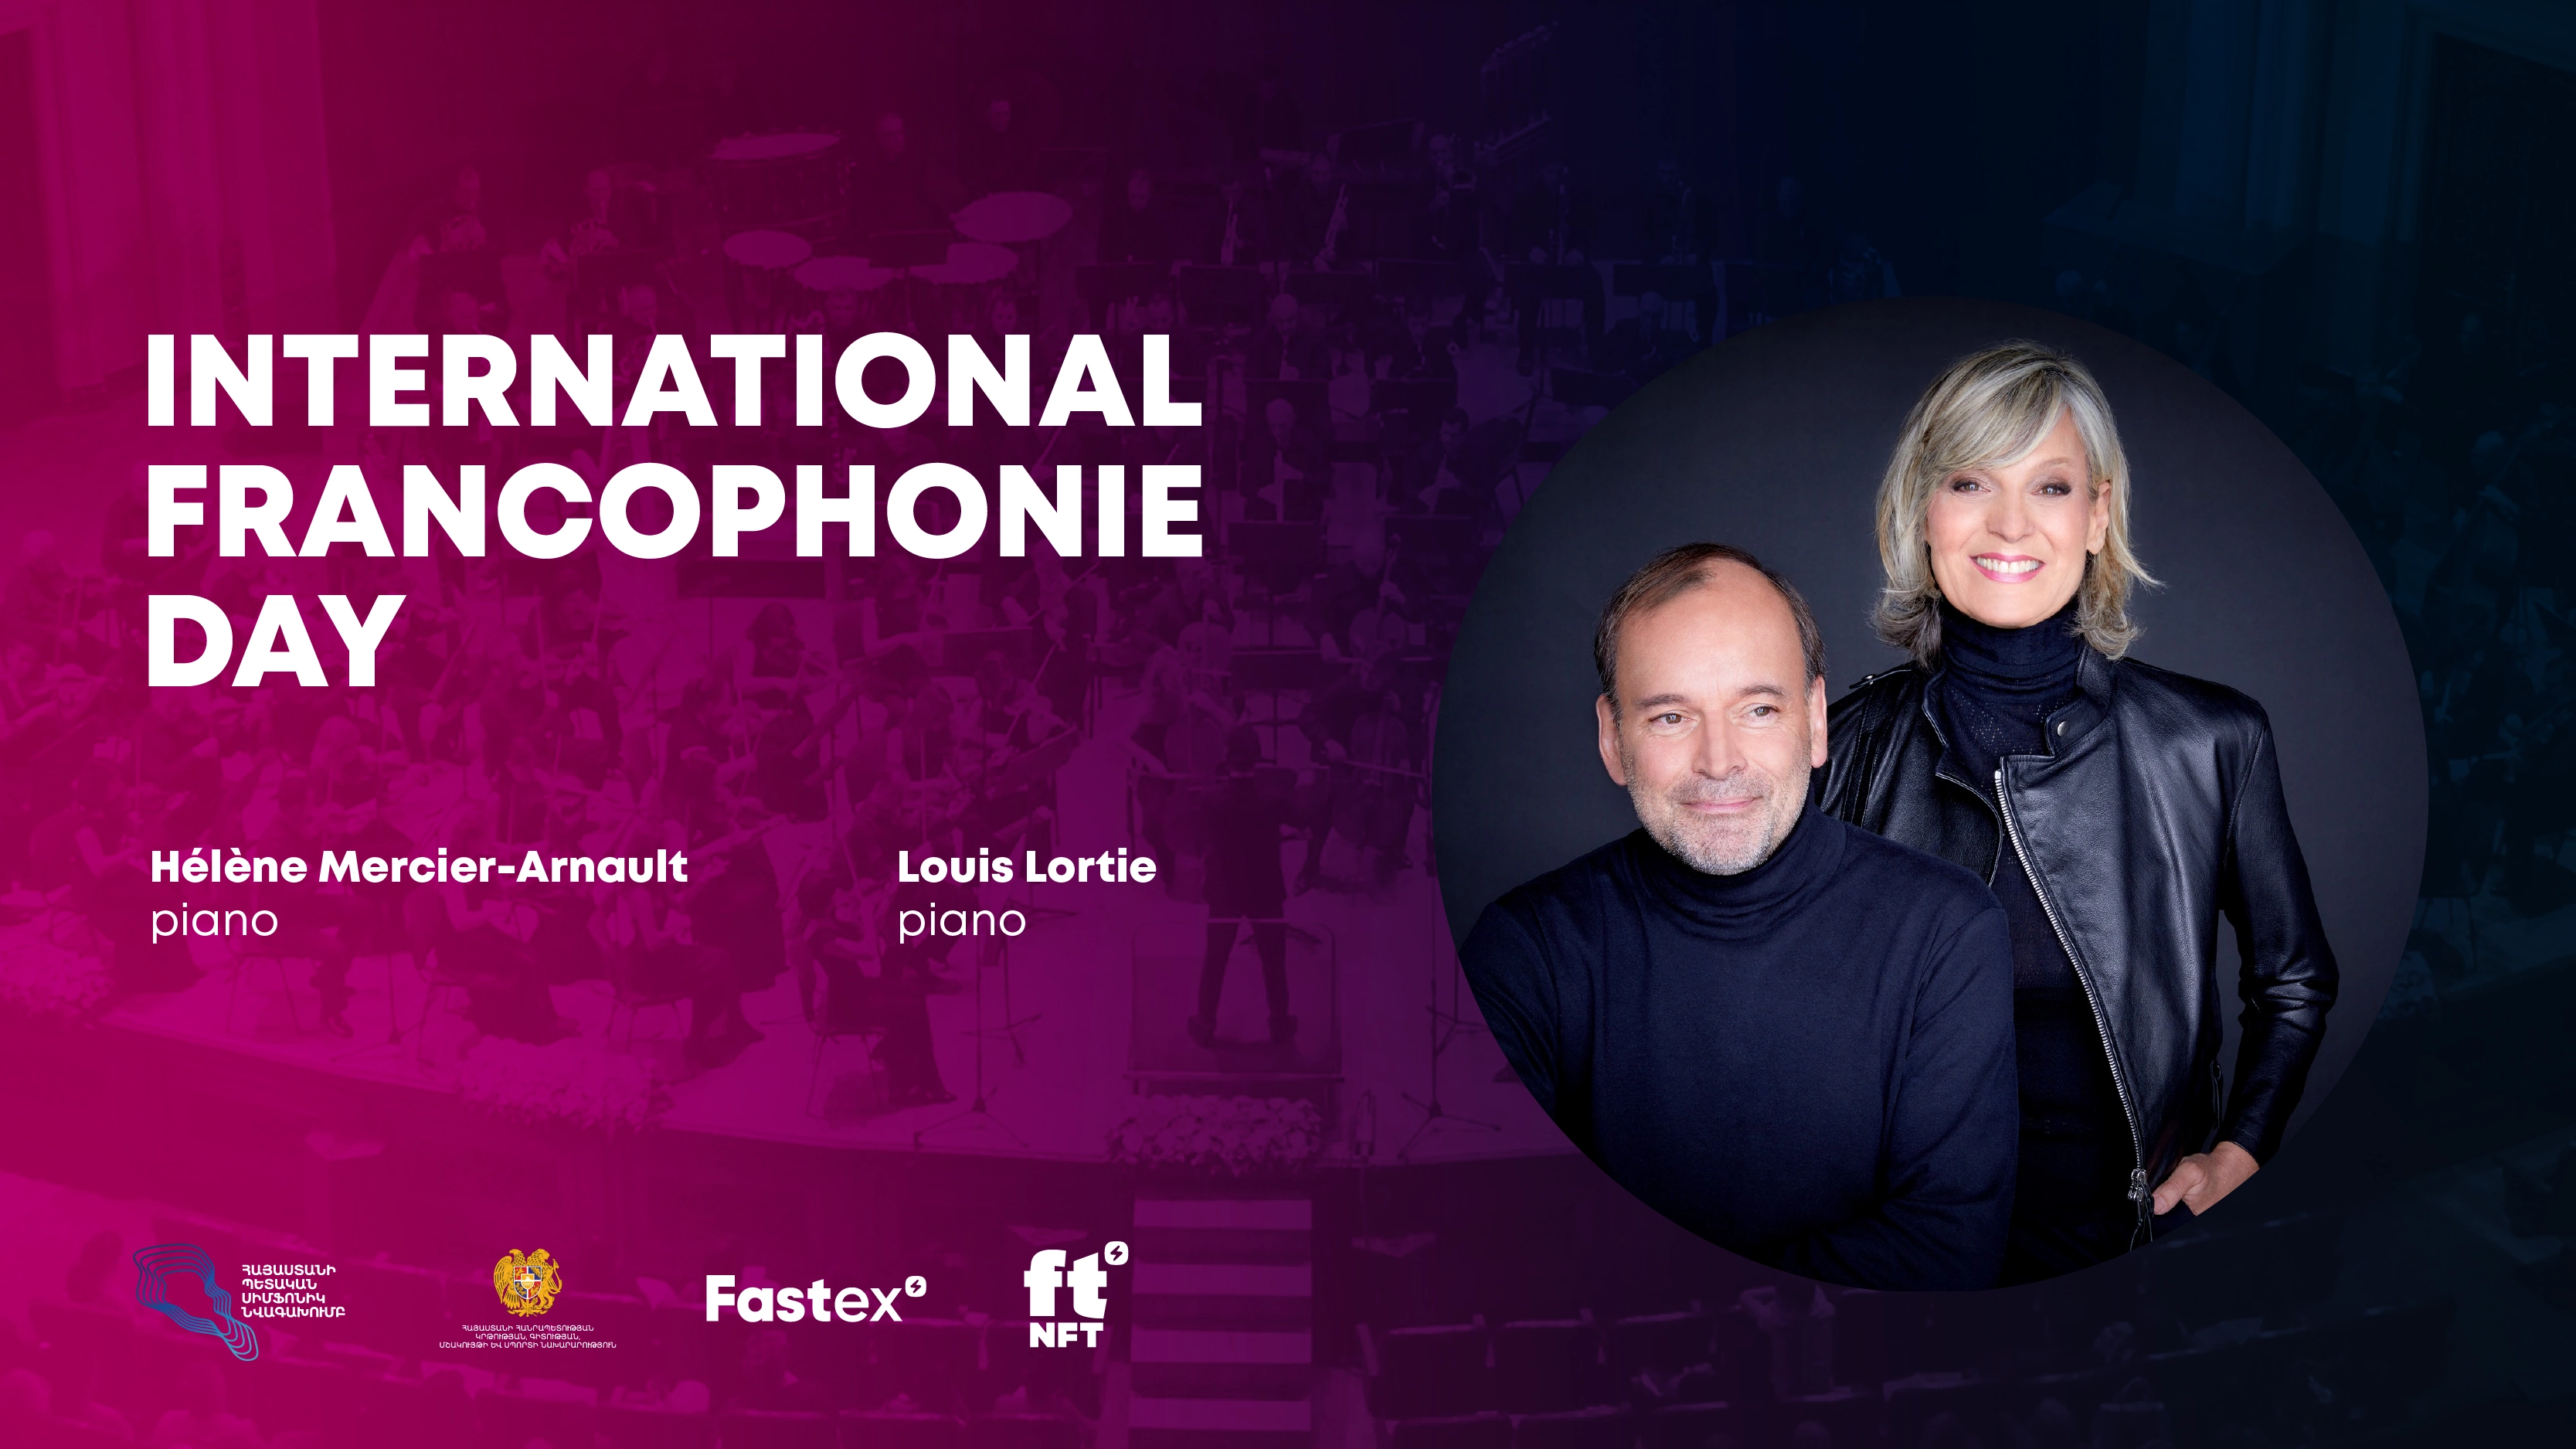 A Fastex e a ftNFT apoiam o concerto sinfónico dedicado ao Dia Internacional da Francofonia